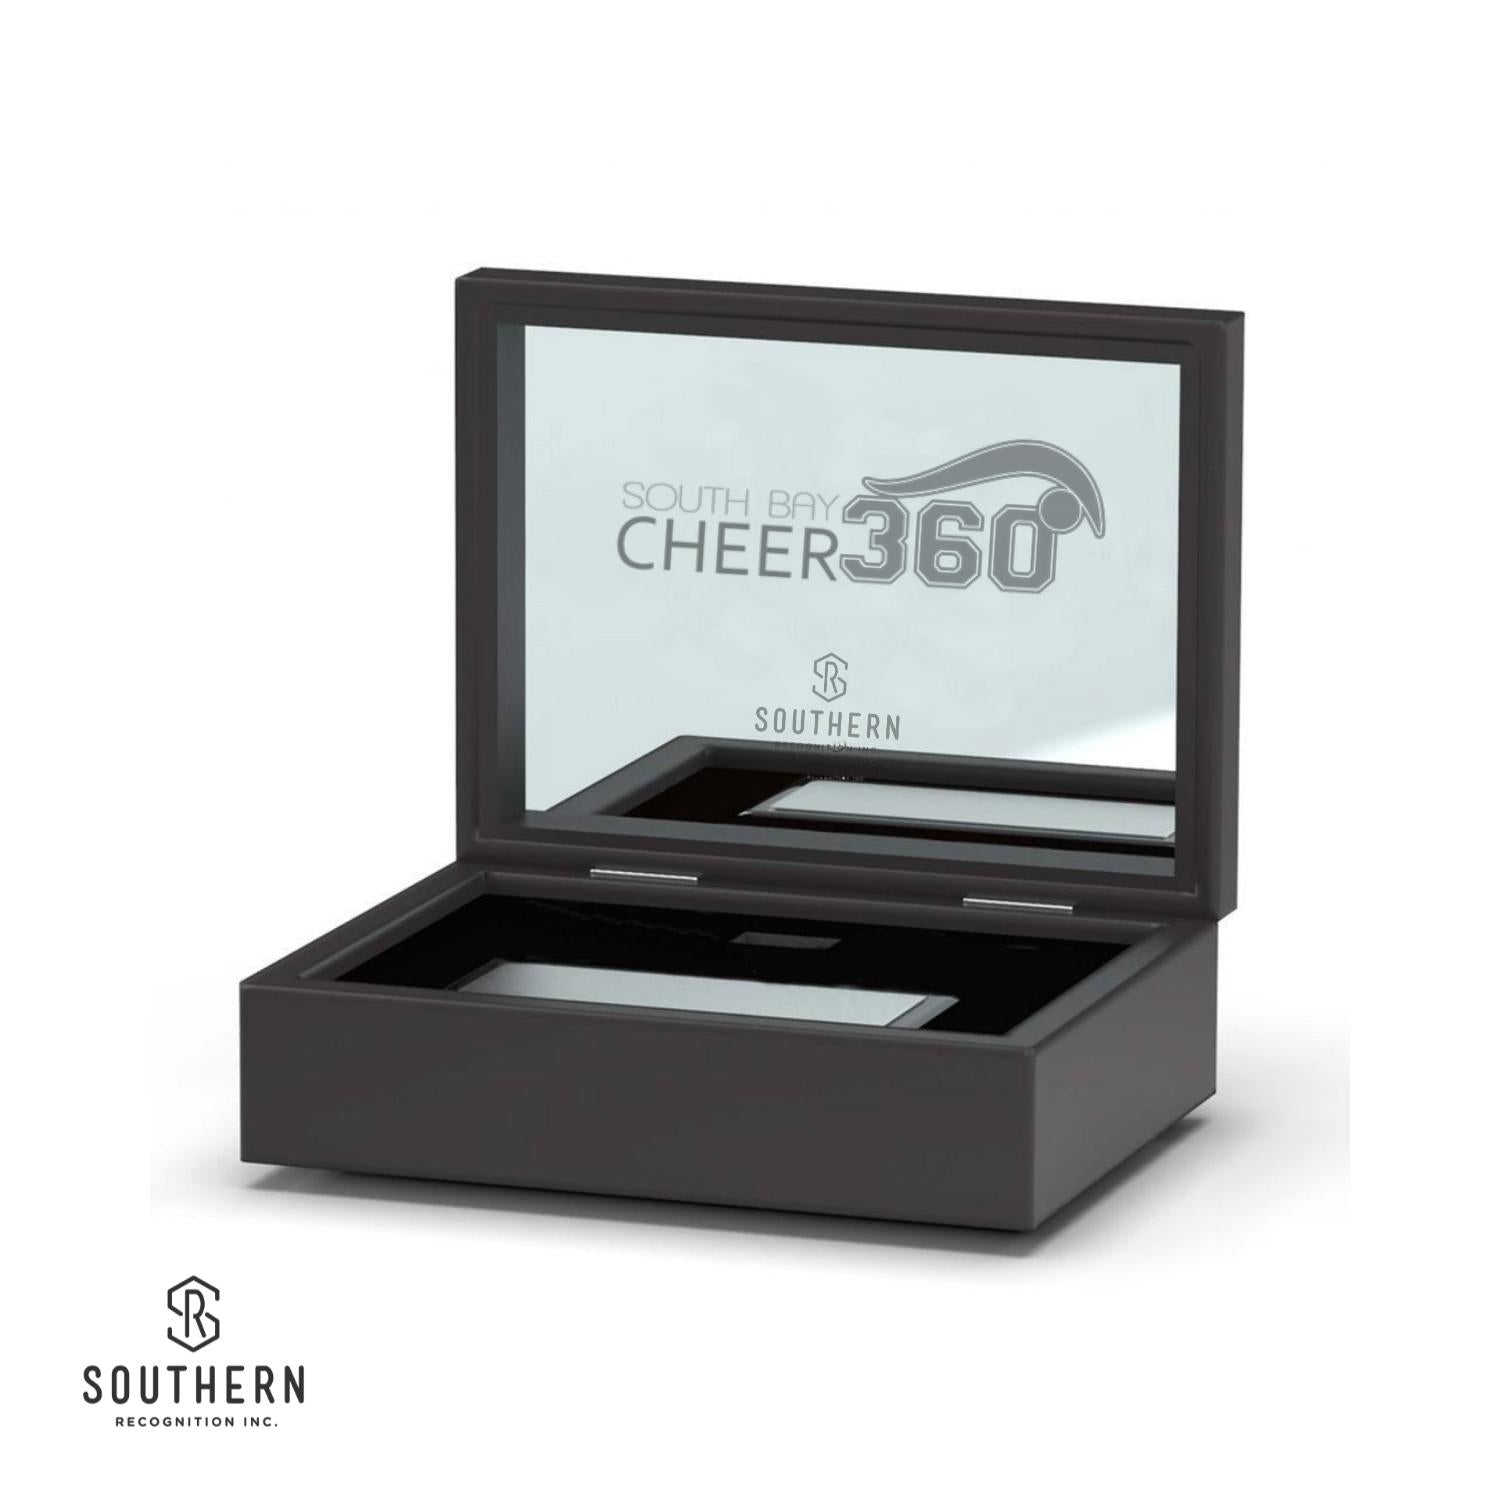 South Bay Cheer 360 - Custom Presentation Box